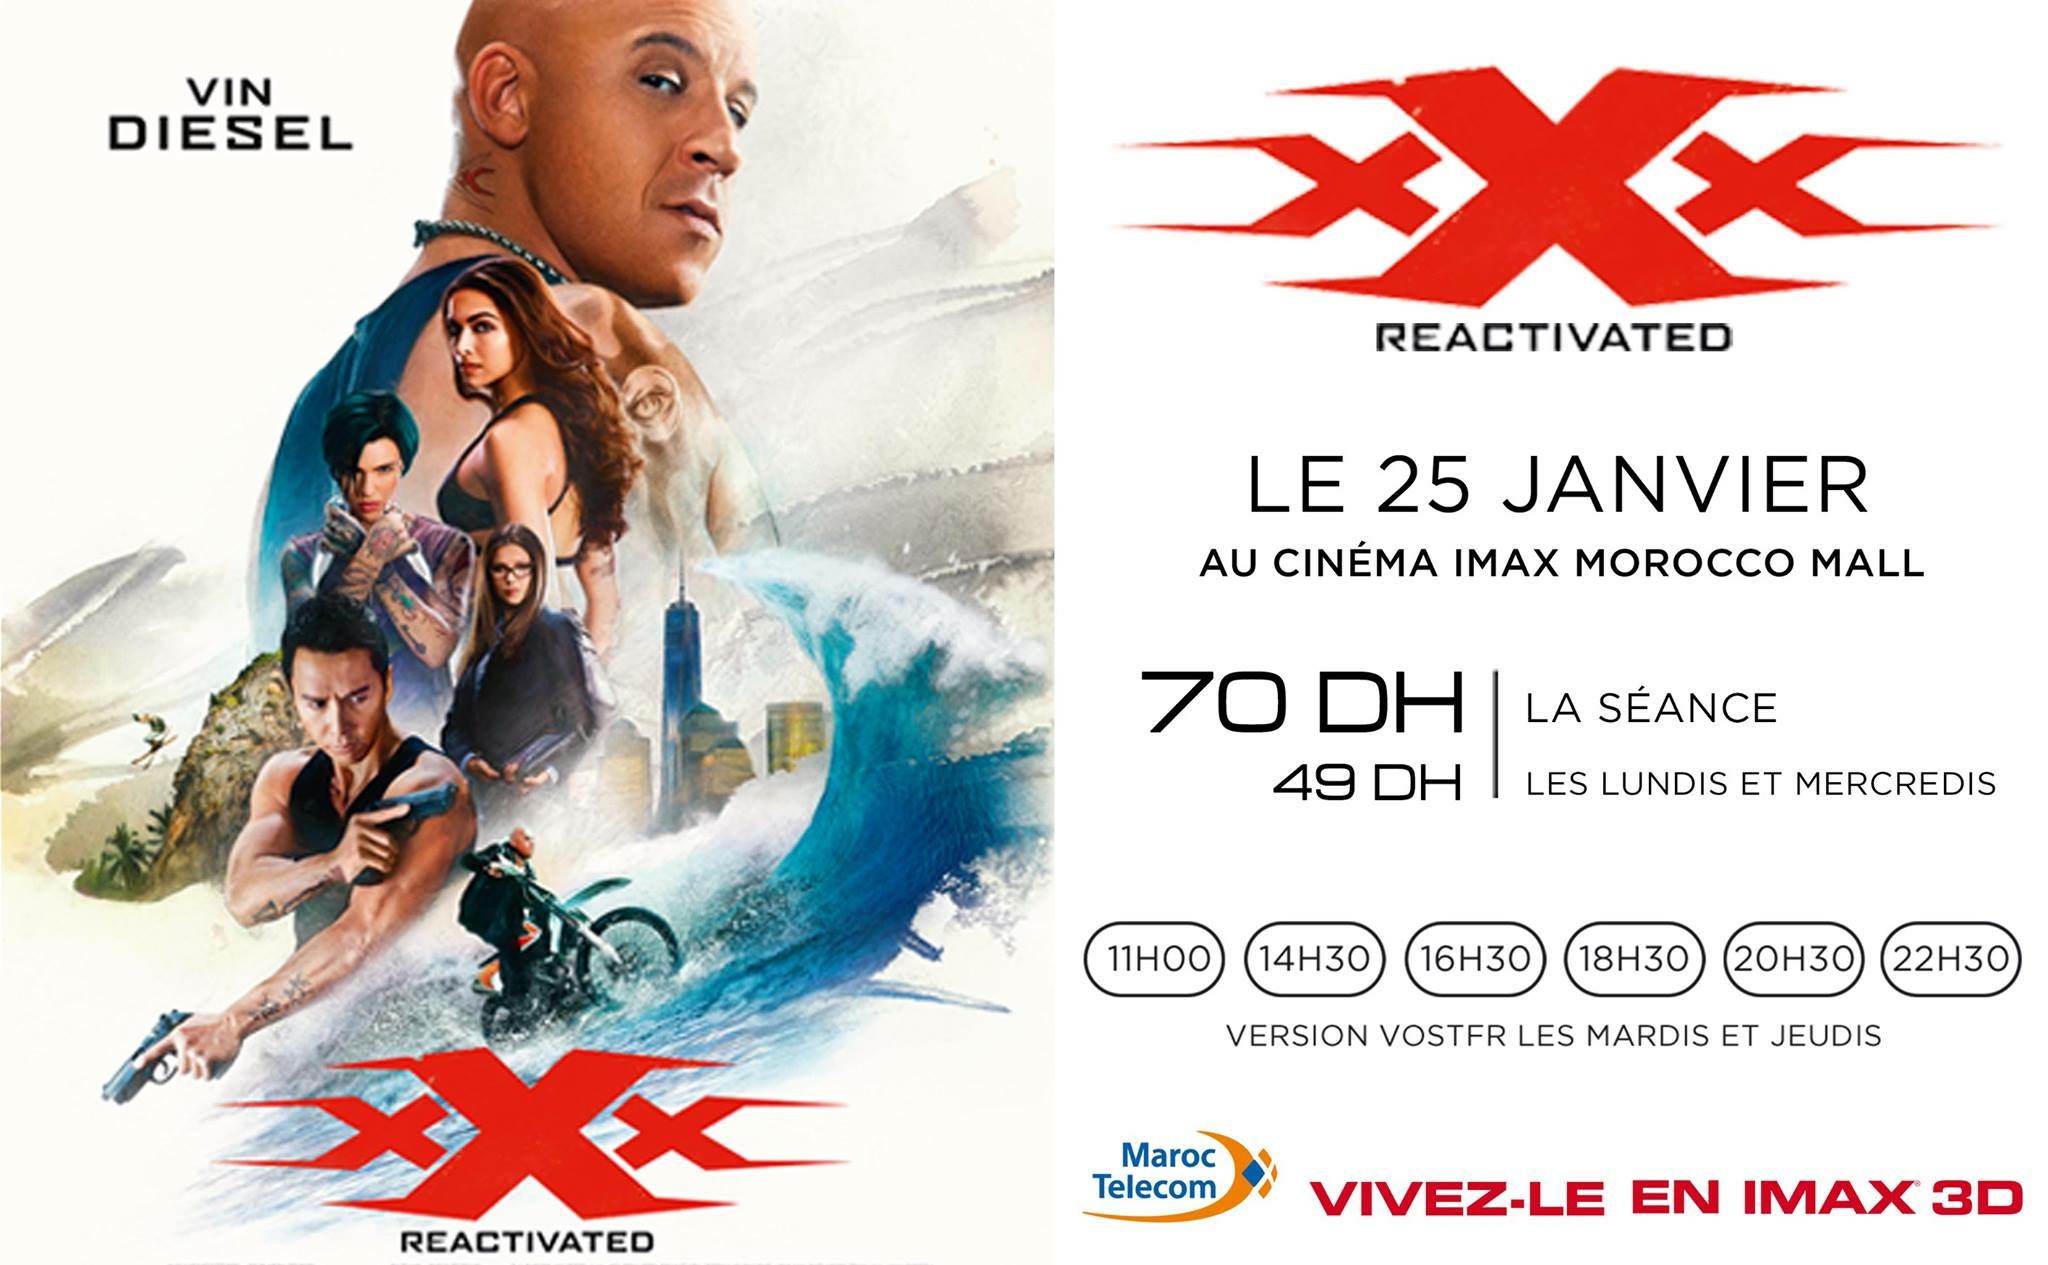 XXX REACTIVATED IMAX MOROCCO MALL